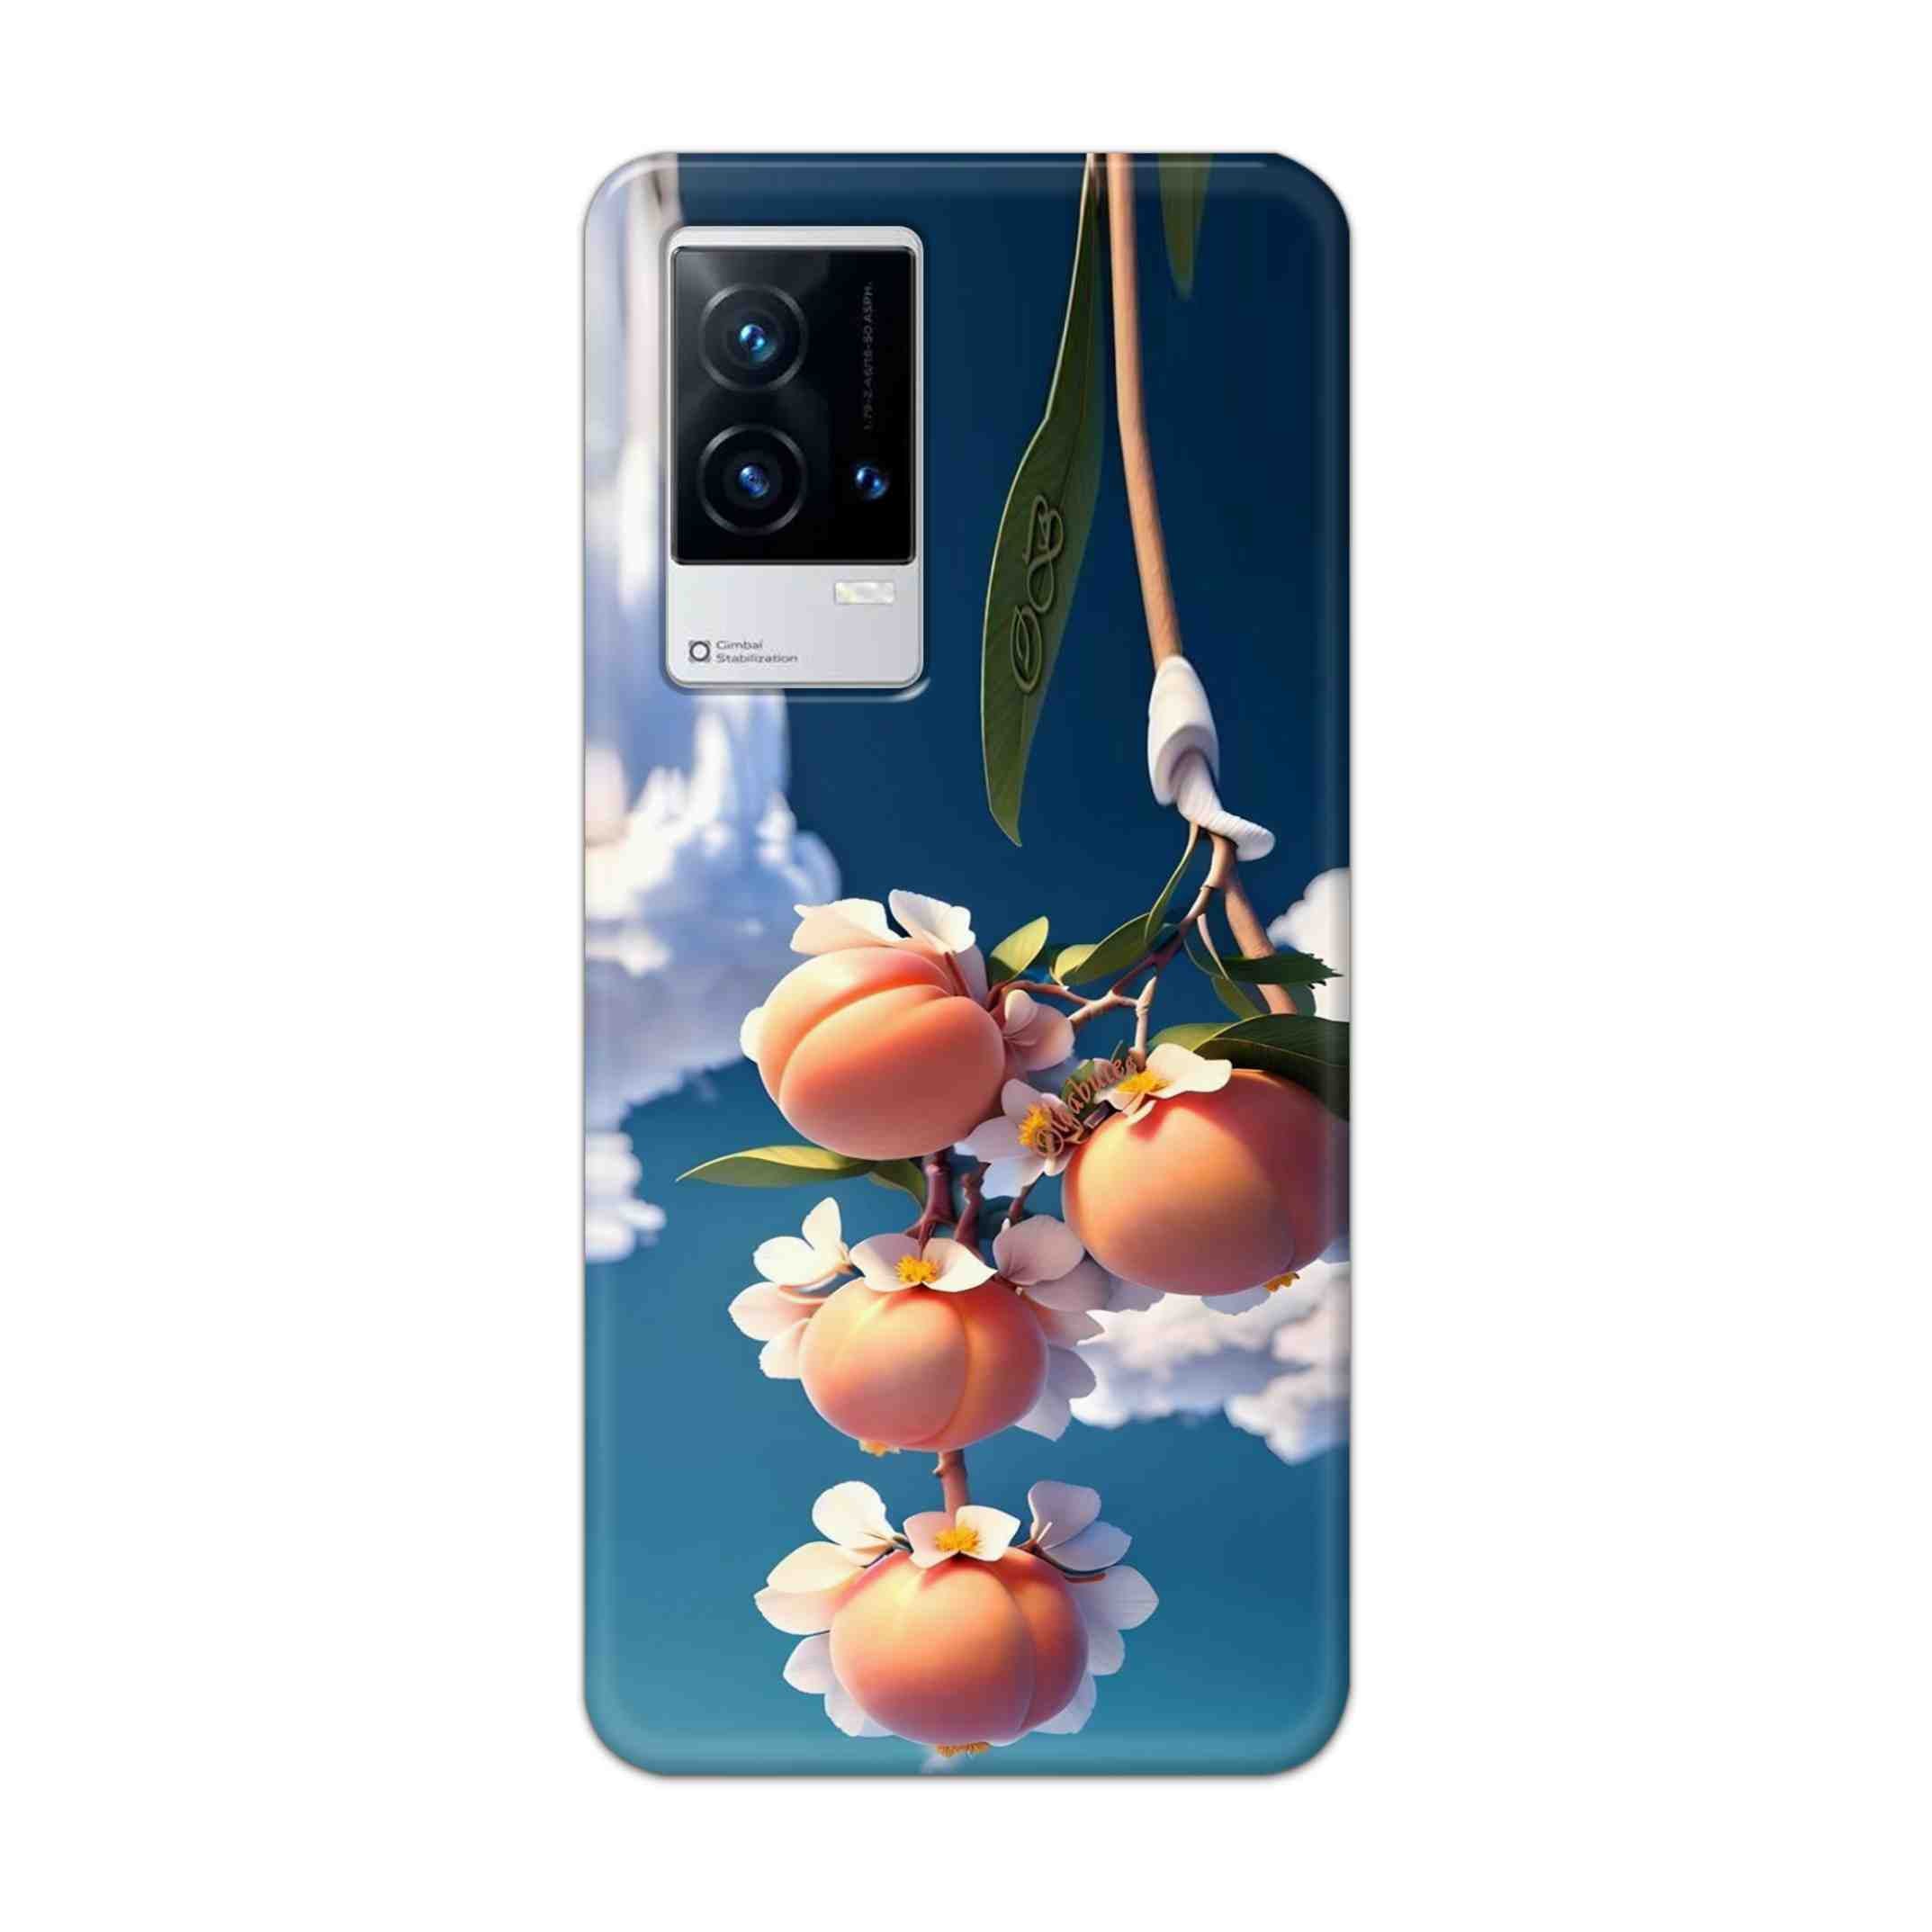 Buy Fruit Hard Back Mobile Phone Case Cover For Vivo iQOO 9 5G Online